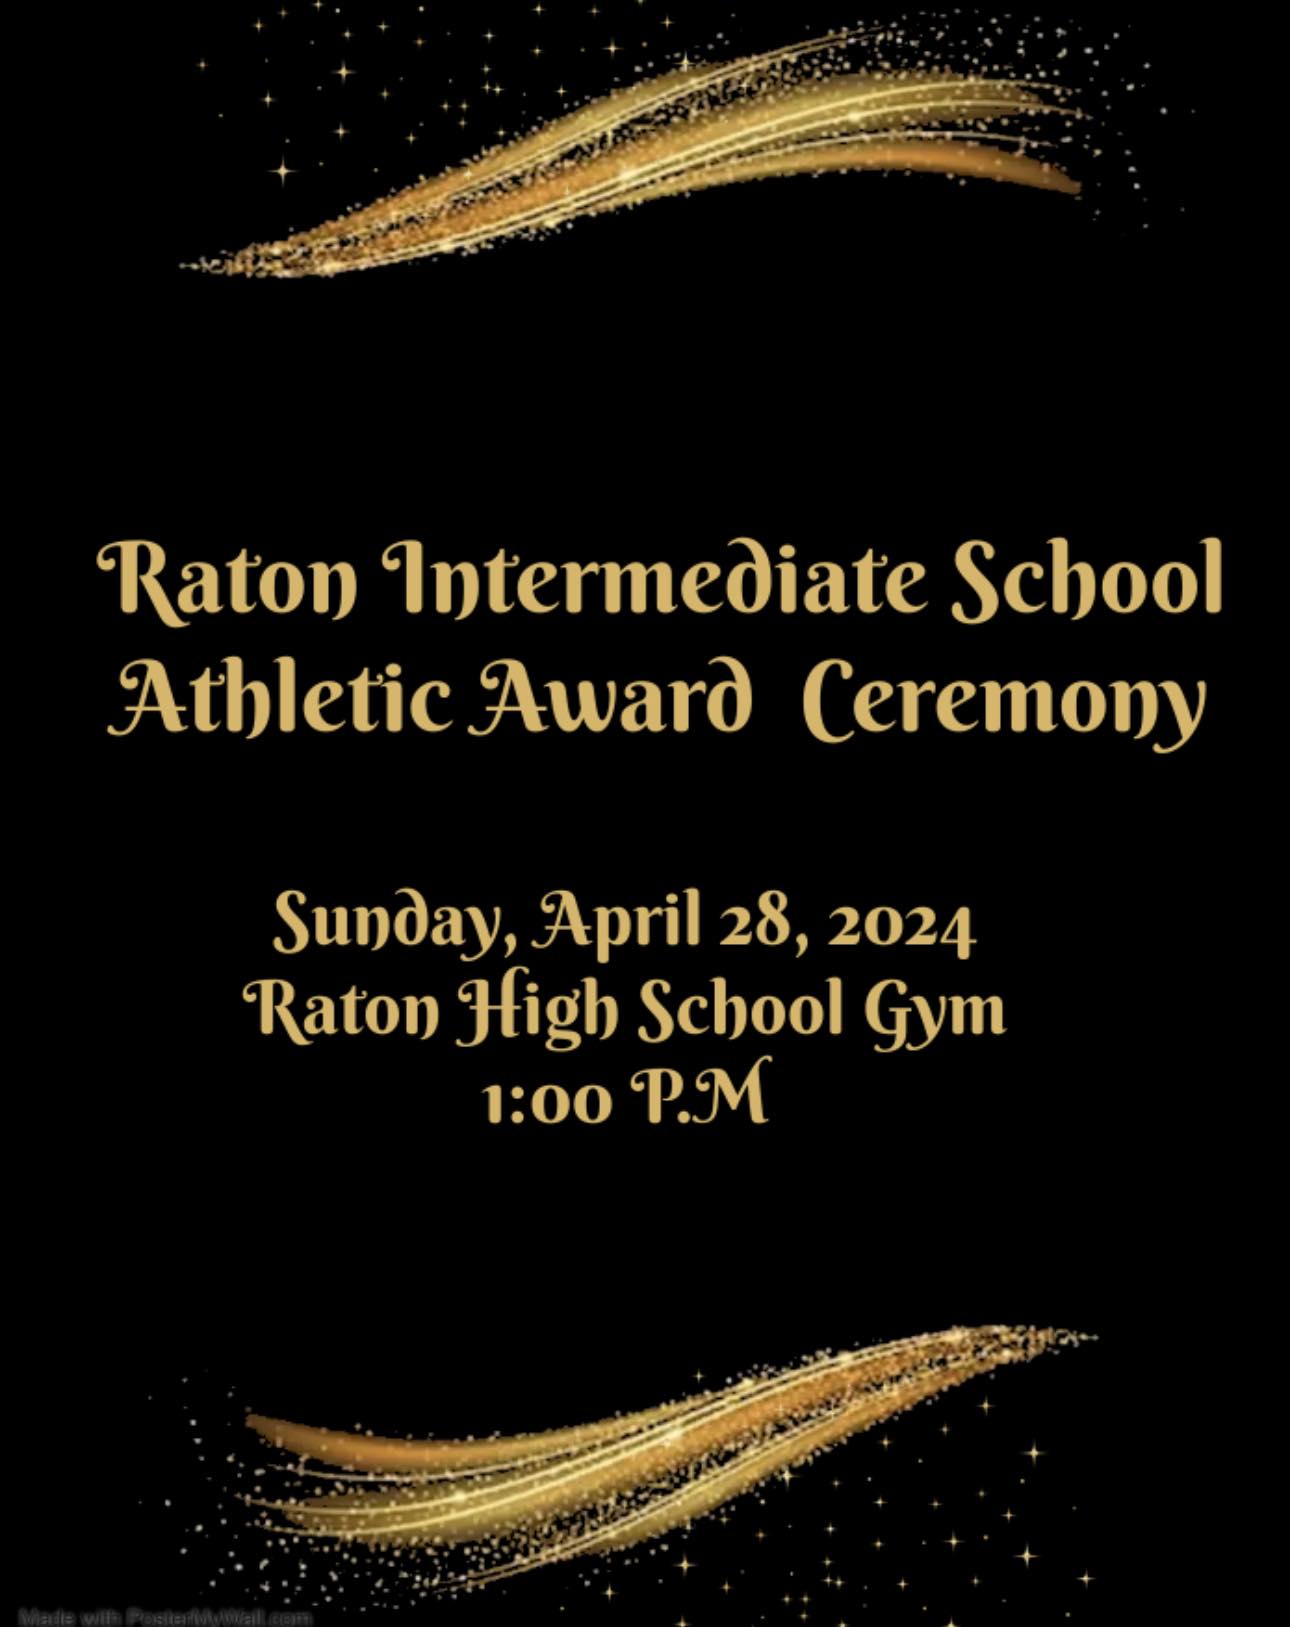 RIS Athletic Awards Ceremony